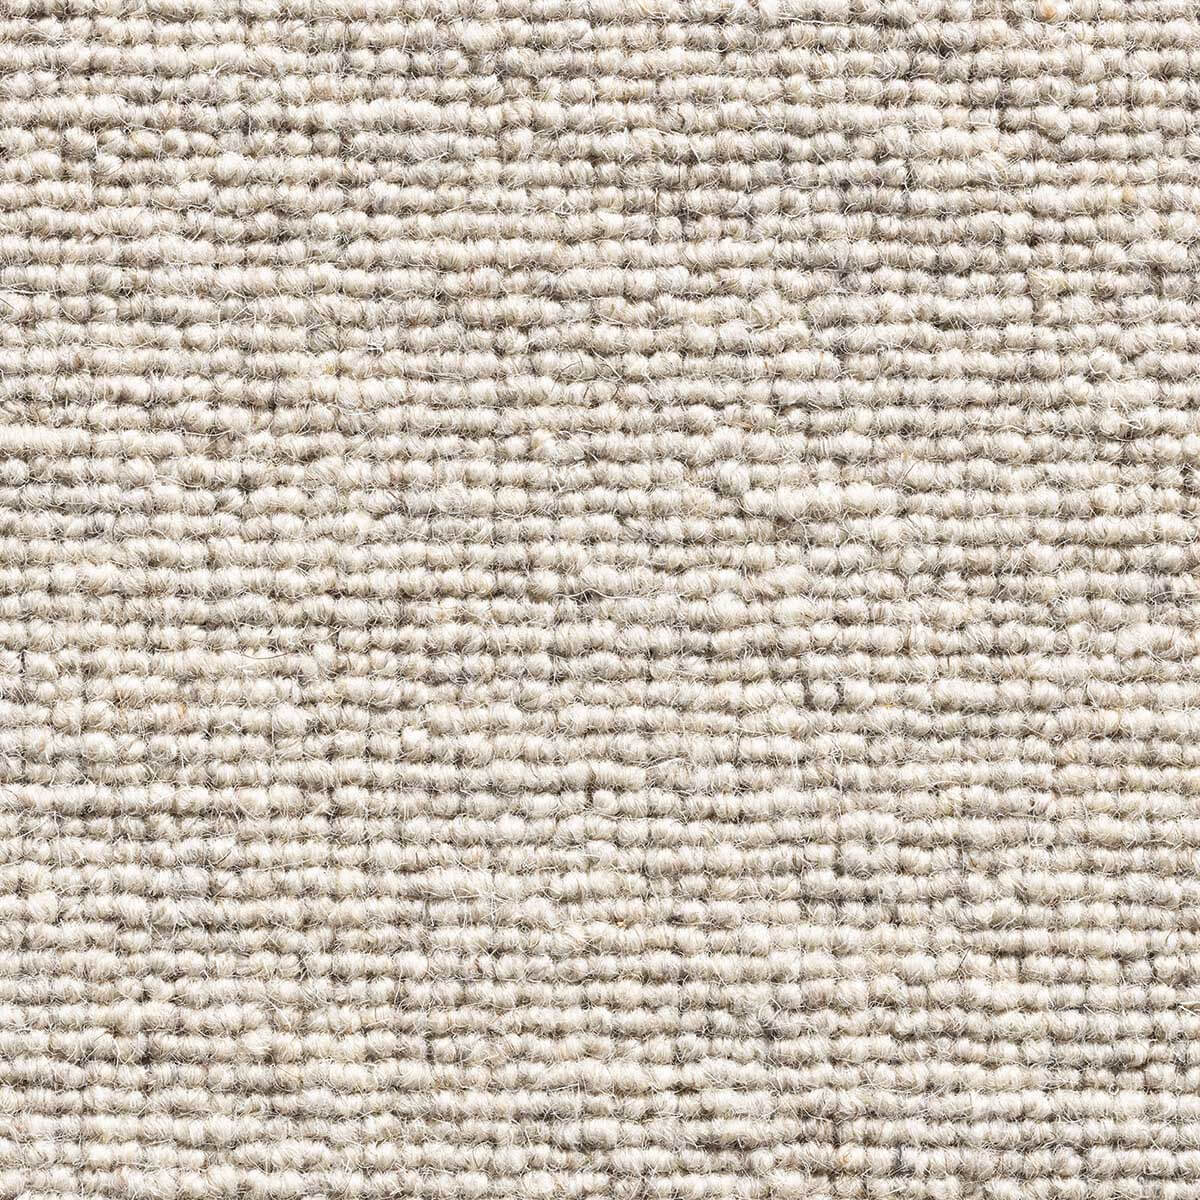 Glen Loop Wool Carpet - Oatmeal 274